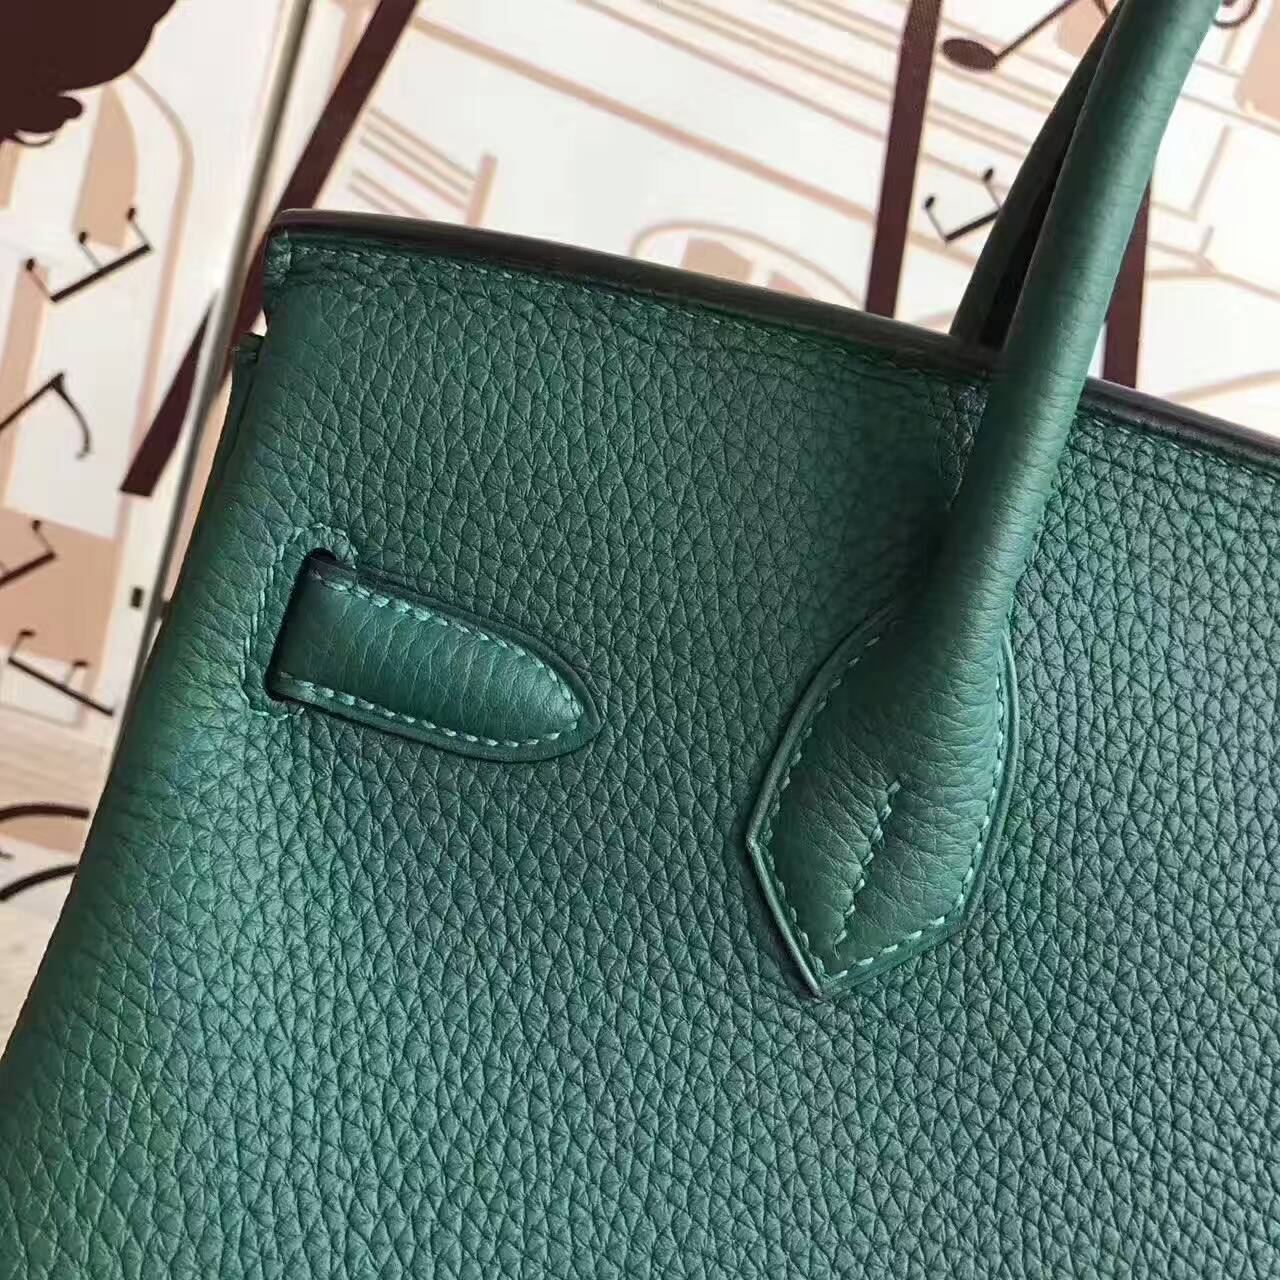 Hand Stitching Hermes Z6 Malachite Green Togo Leather Birkin Bag 30cm